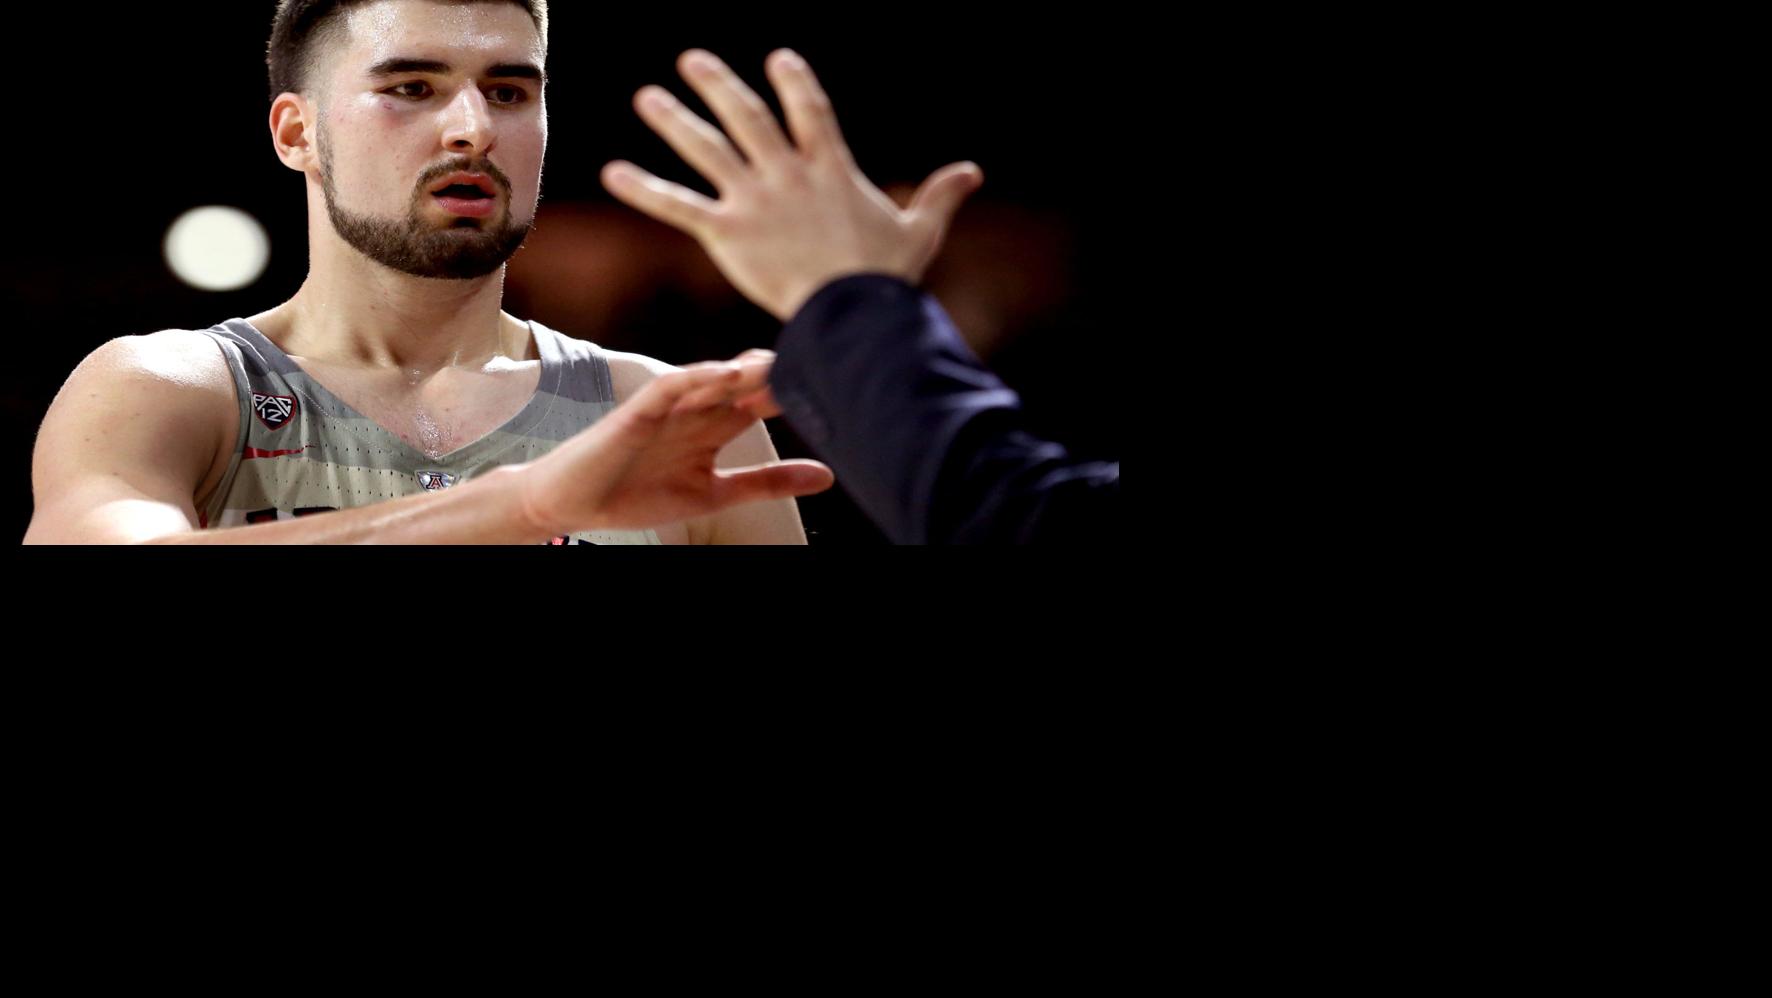 Nikola Jokic Serbia EuroLeague Basketball Jersey Custom Throwback